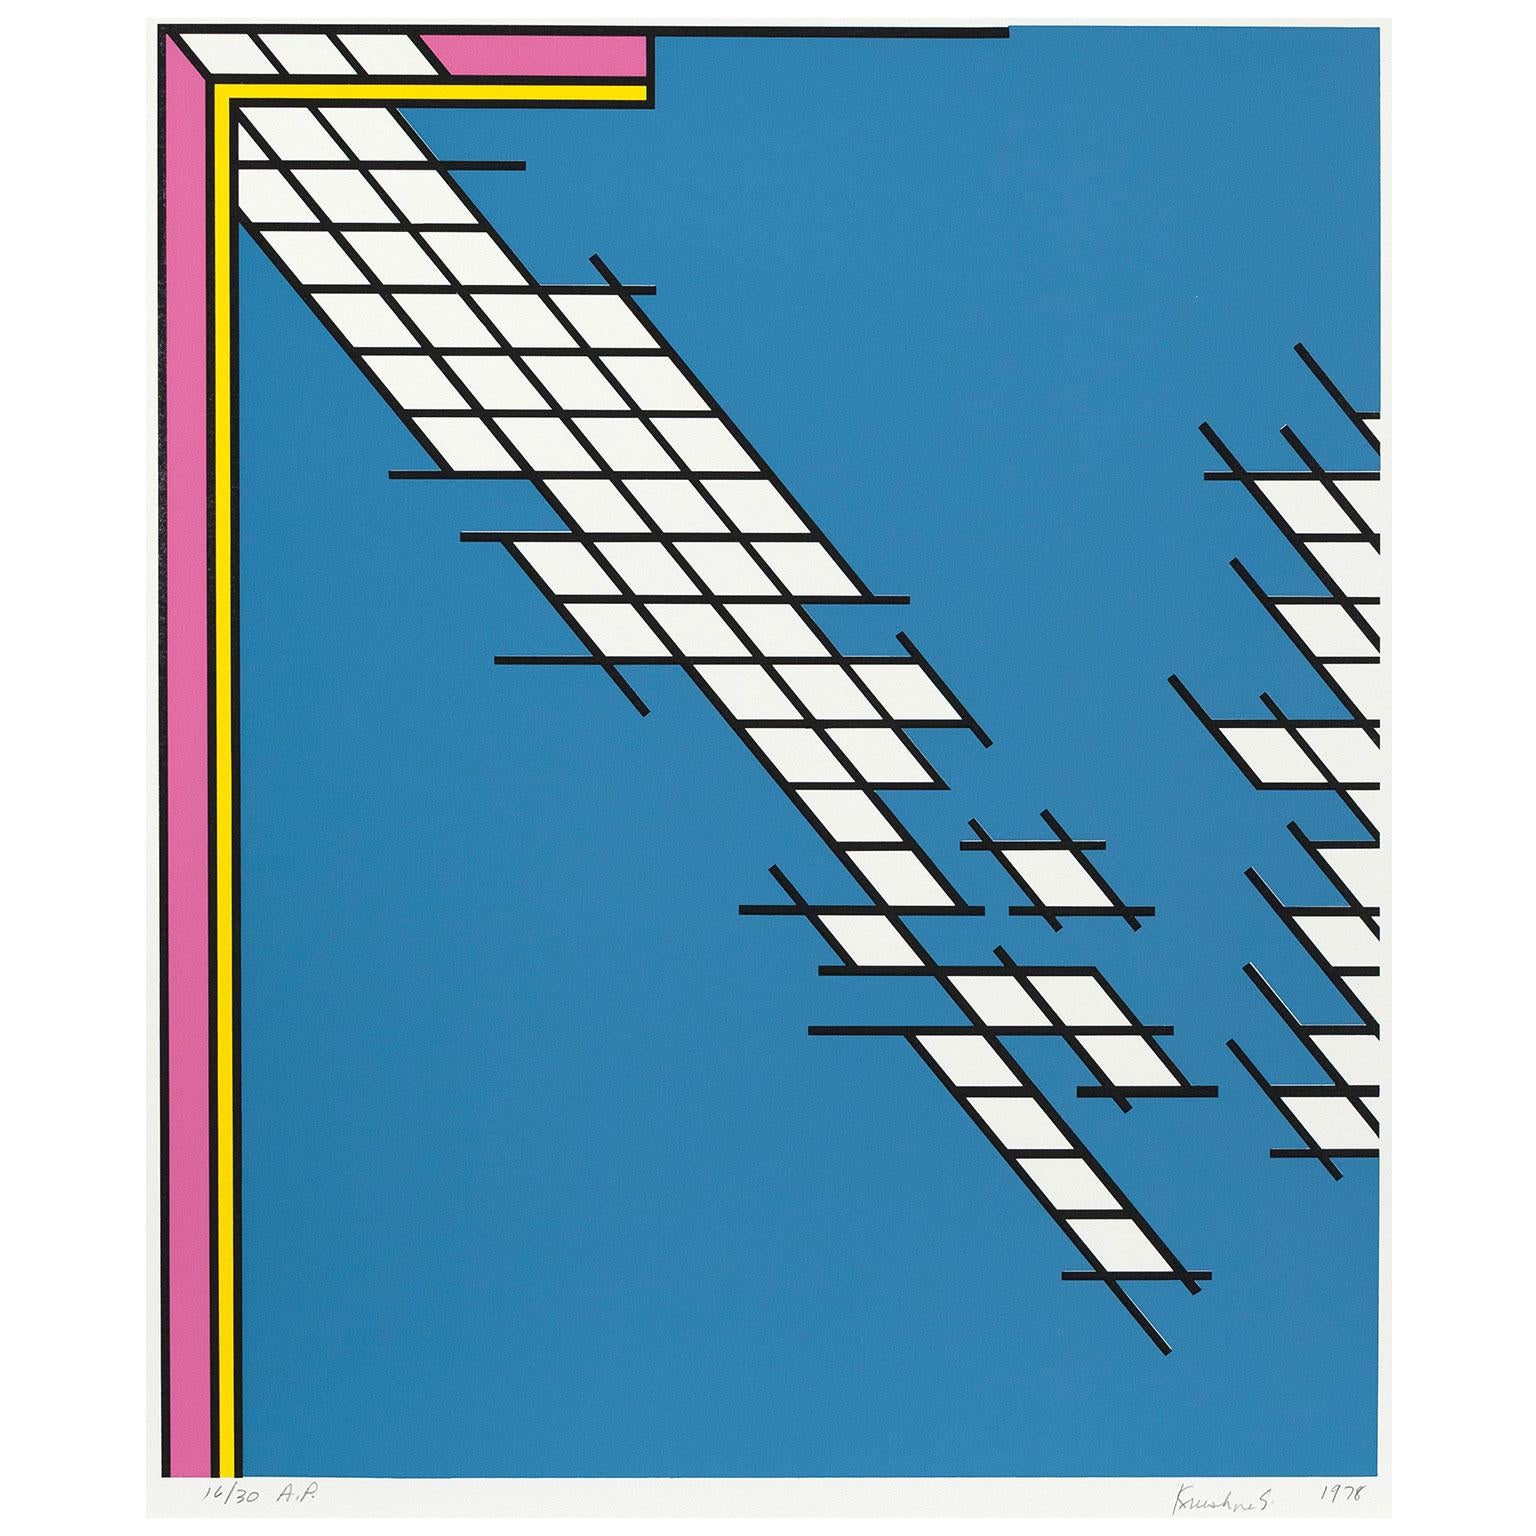 Nicholas Krushenick „Tail Gate“, 1978 